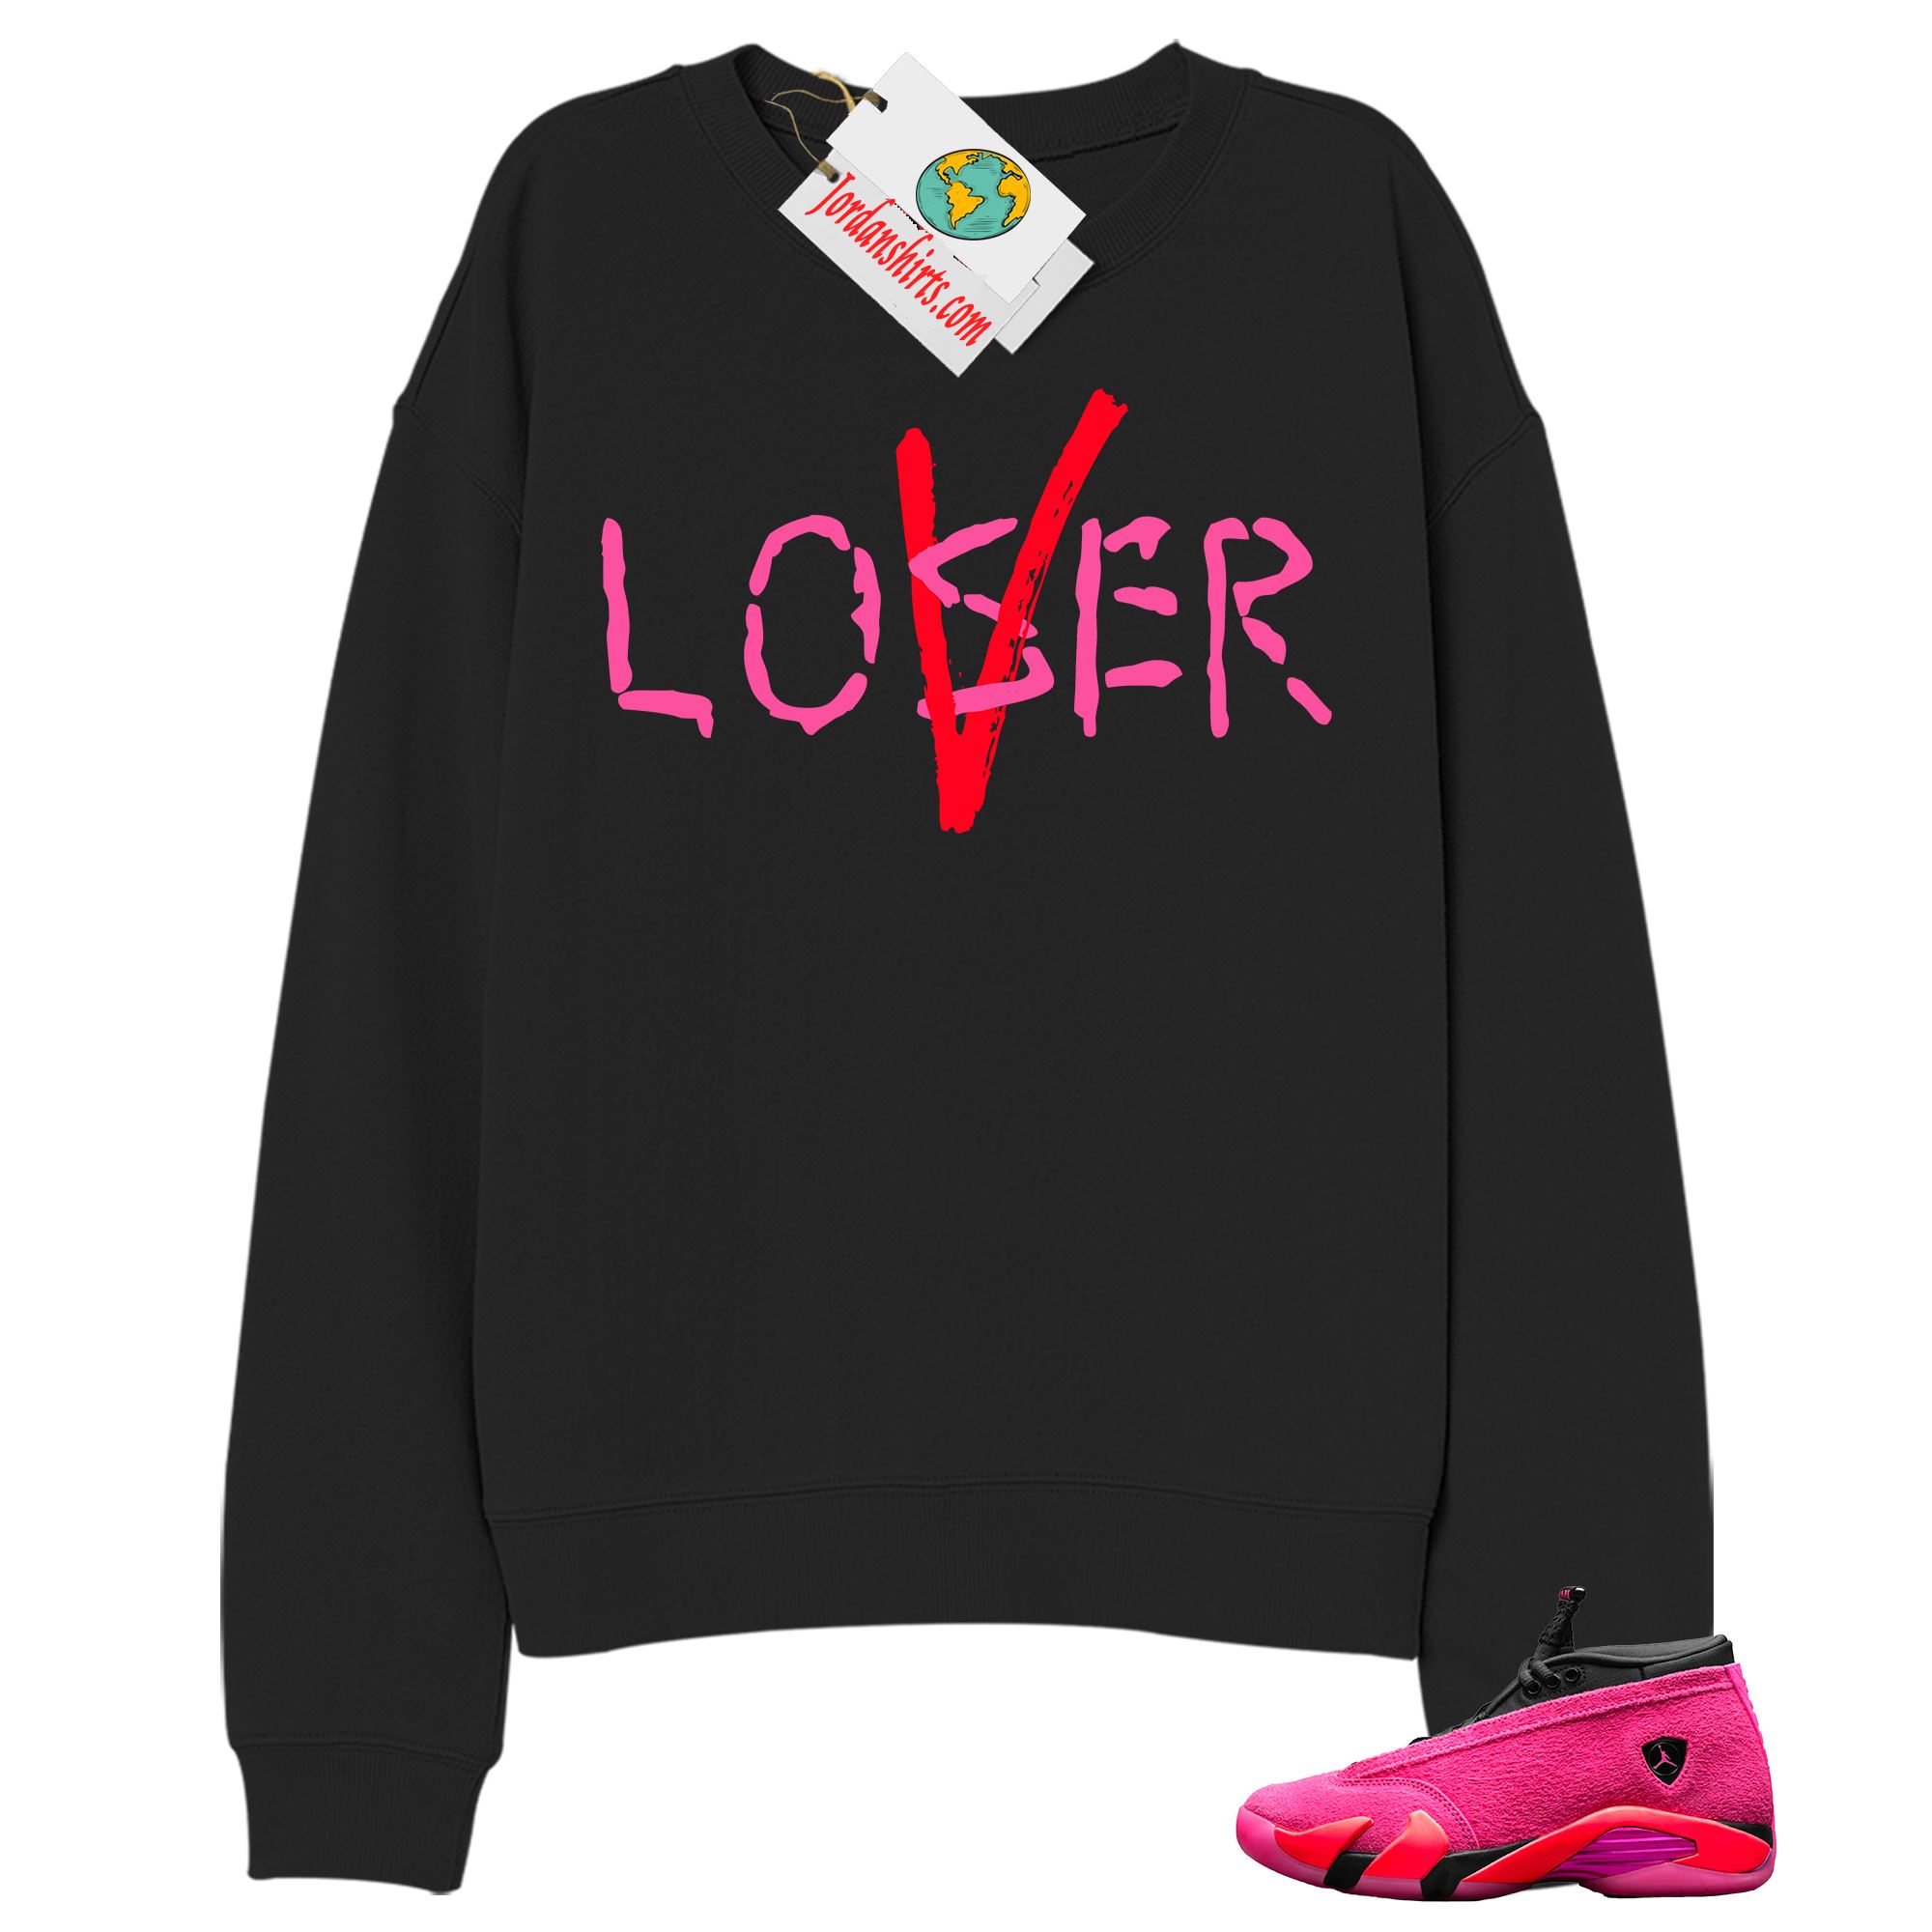 Jordan 14 Sweatshirt, Love A Loser Black Sweatshirt Air Jordan 14 Wmns Shocking Pink 14s Full Size Up To 5xl